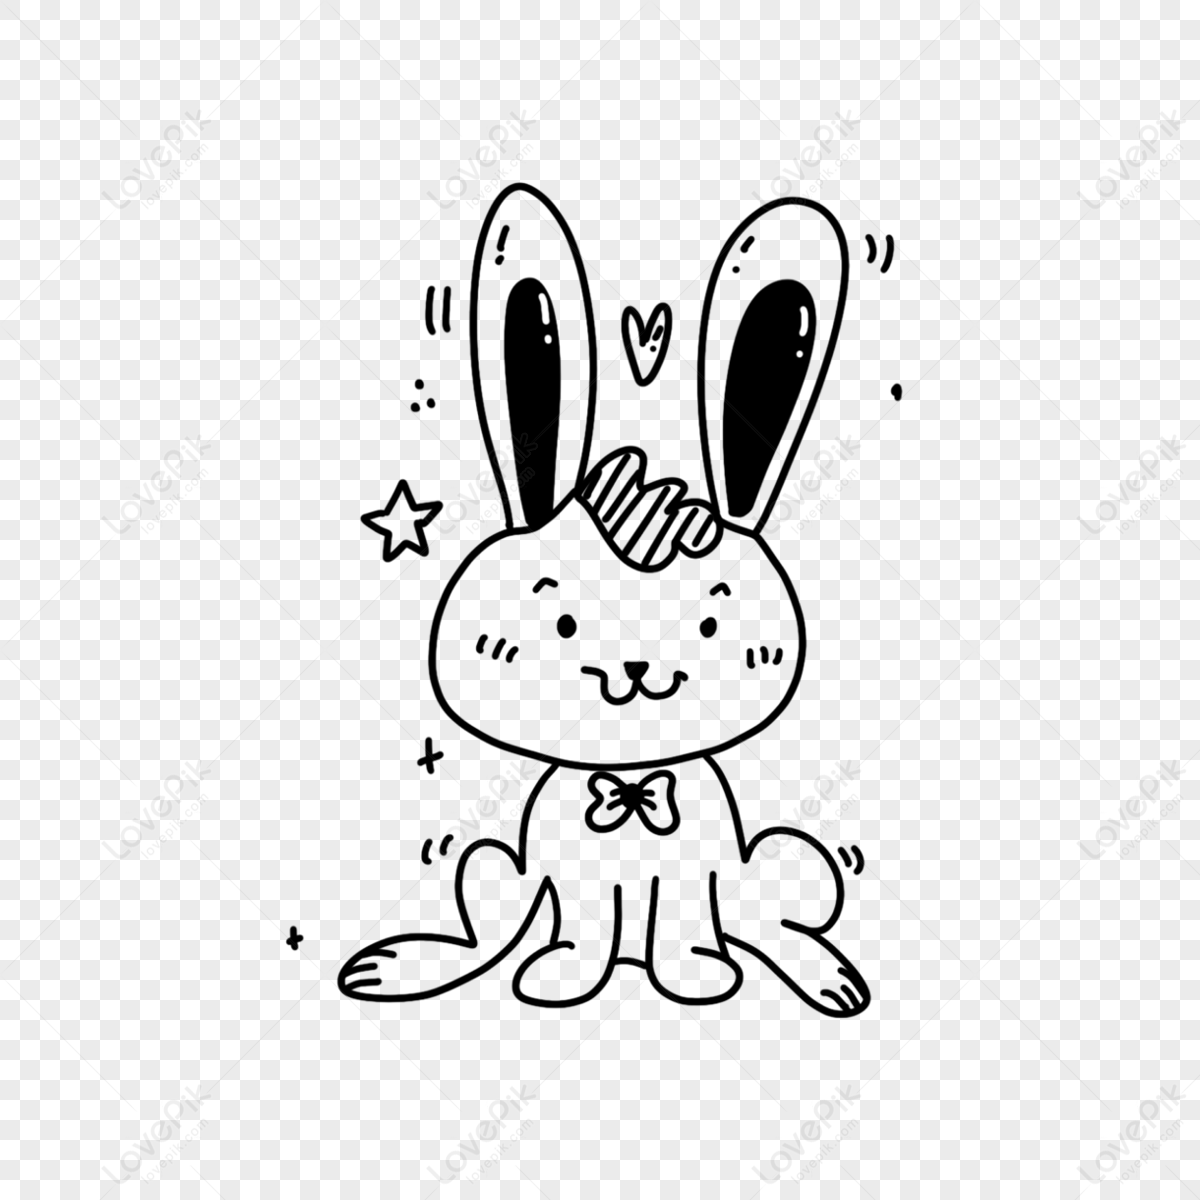 Free Printable How to draw Rabbit Worksheet - kiddoworksheets